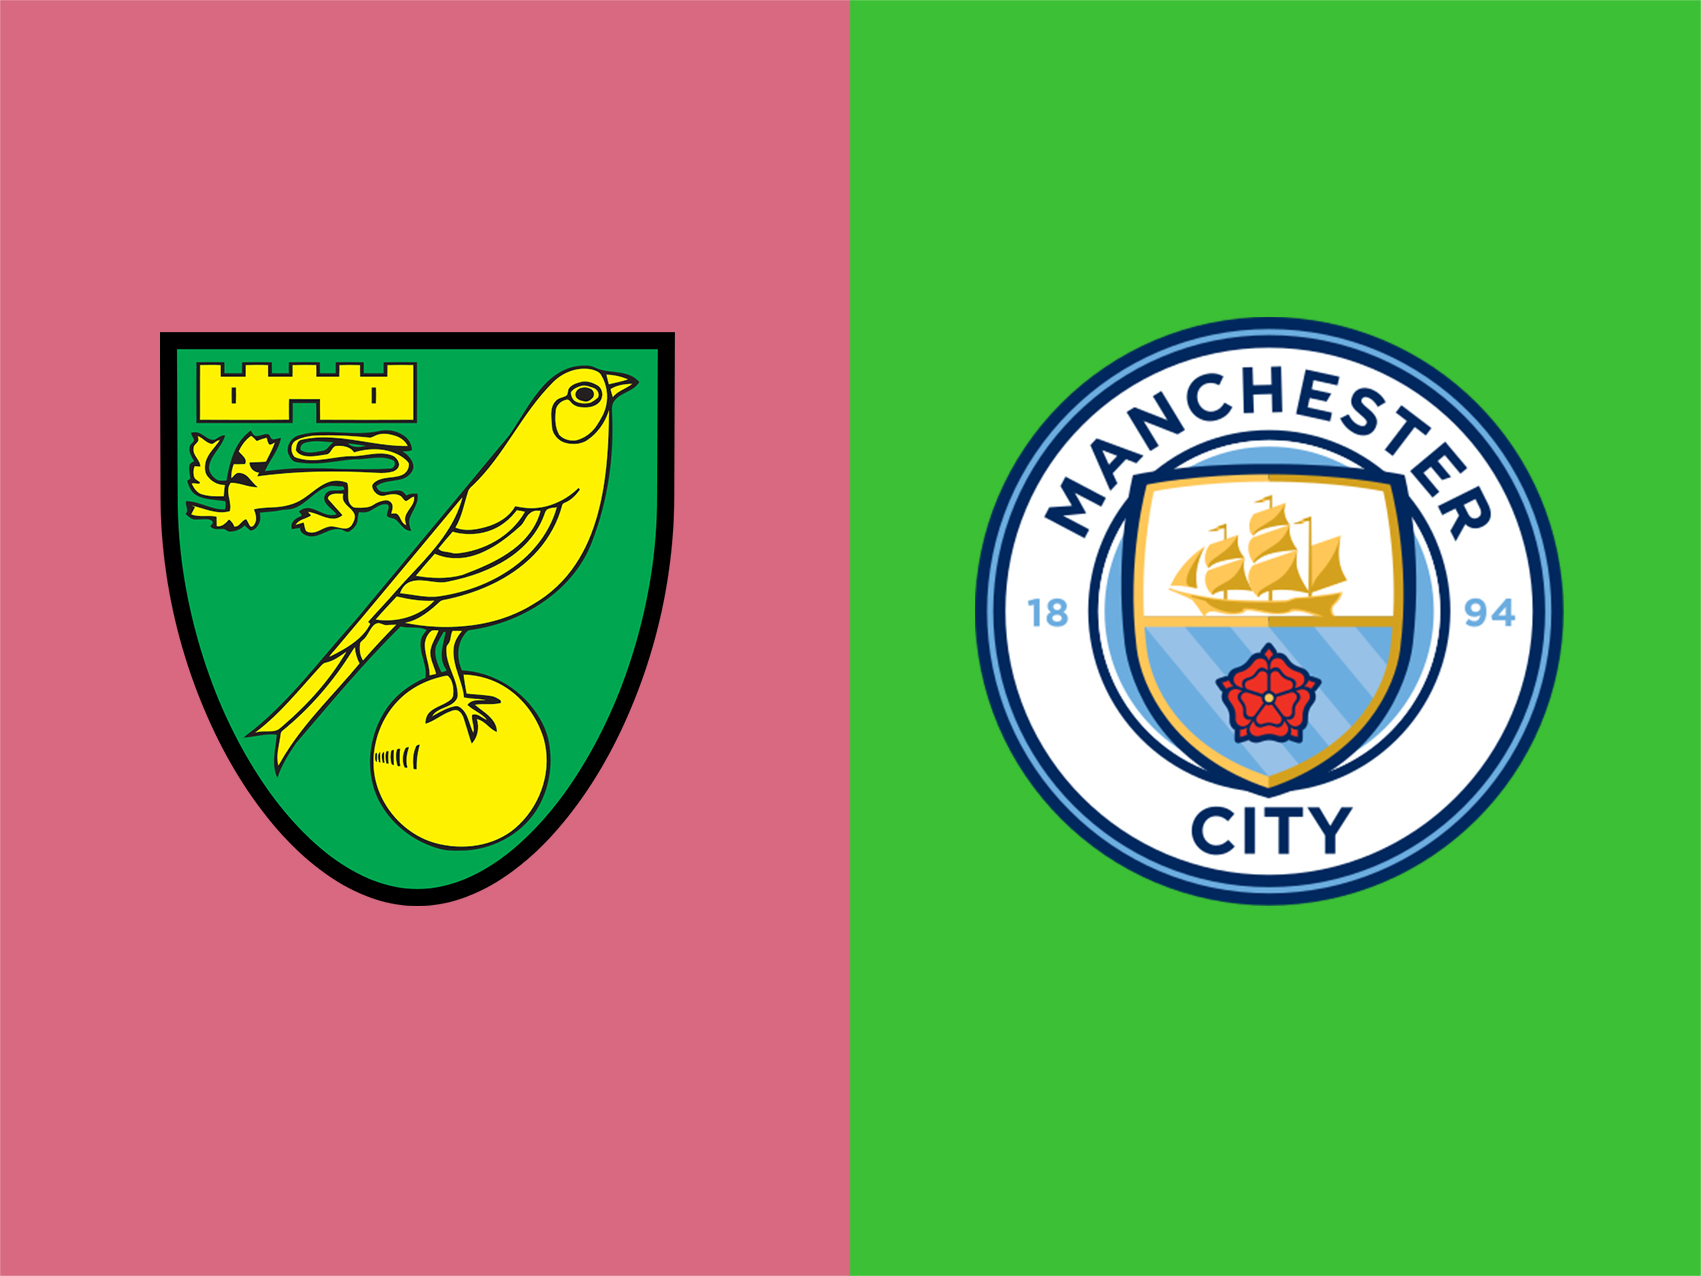 soi-keo-ca-cuoc-bong-da-ngay-14-9-Norwich-vs-Manchester City-do-it-thang-do-nhieu-b9